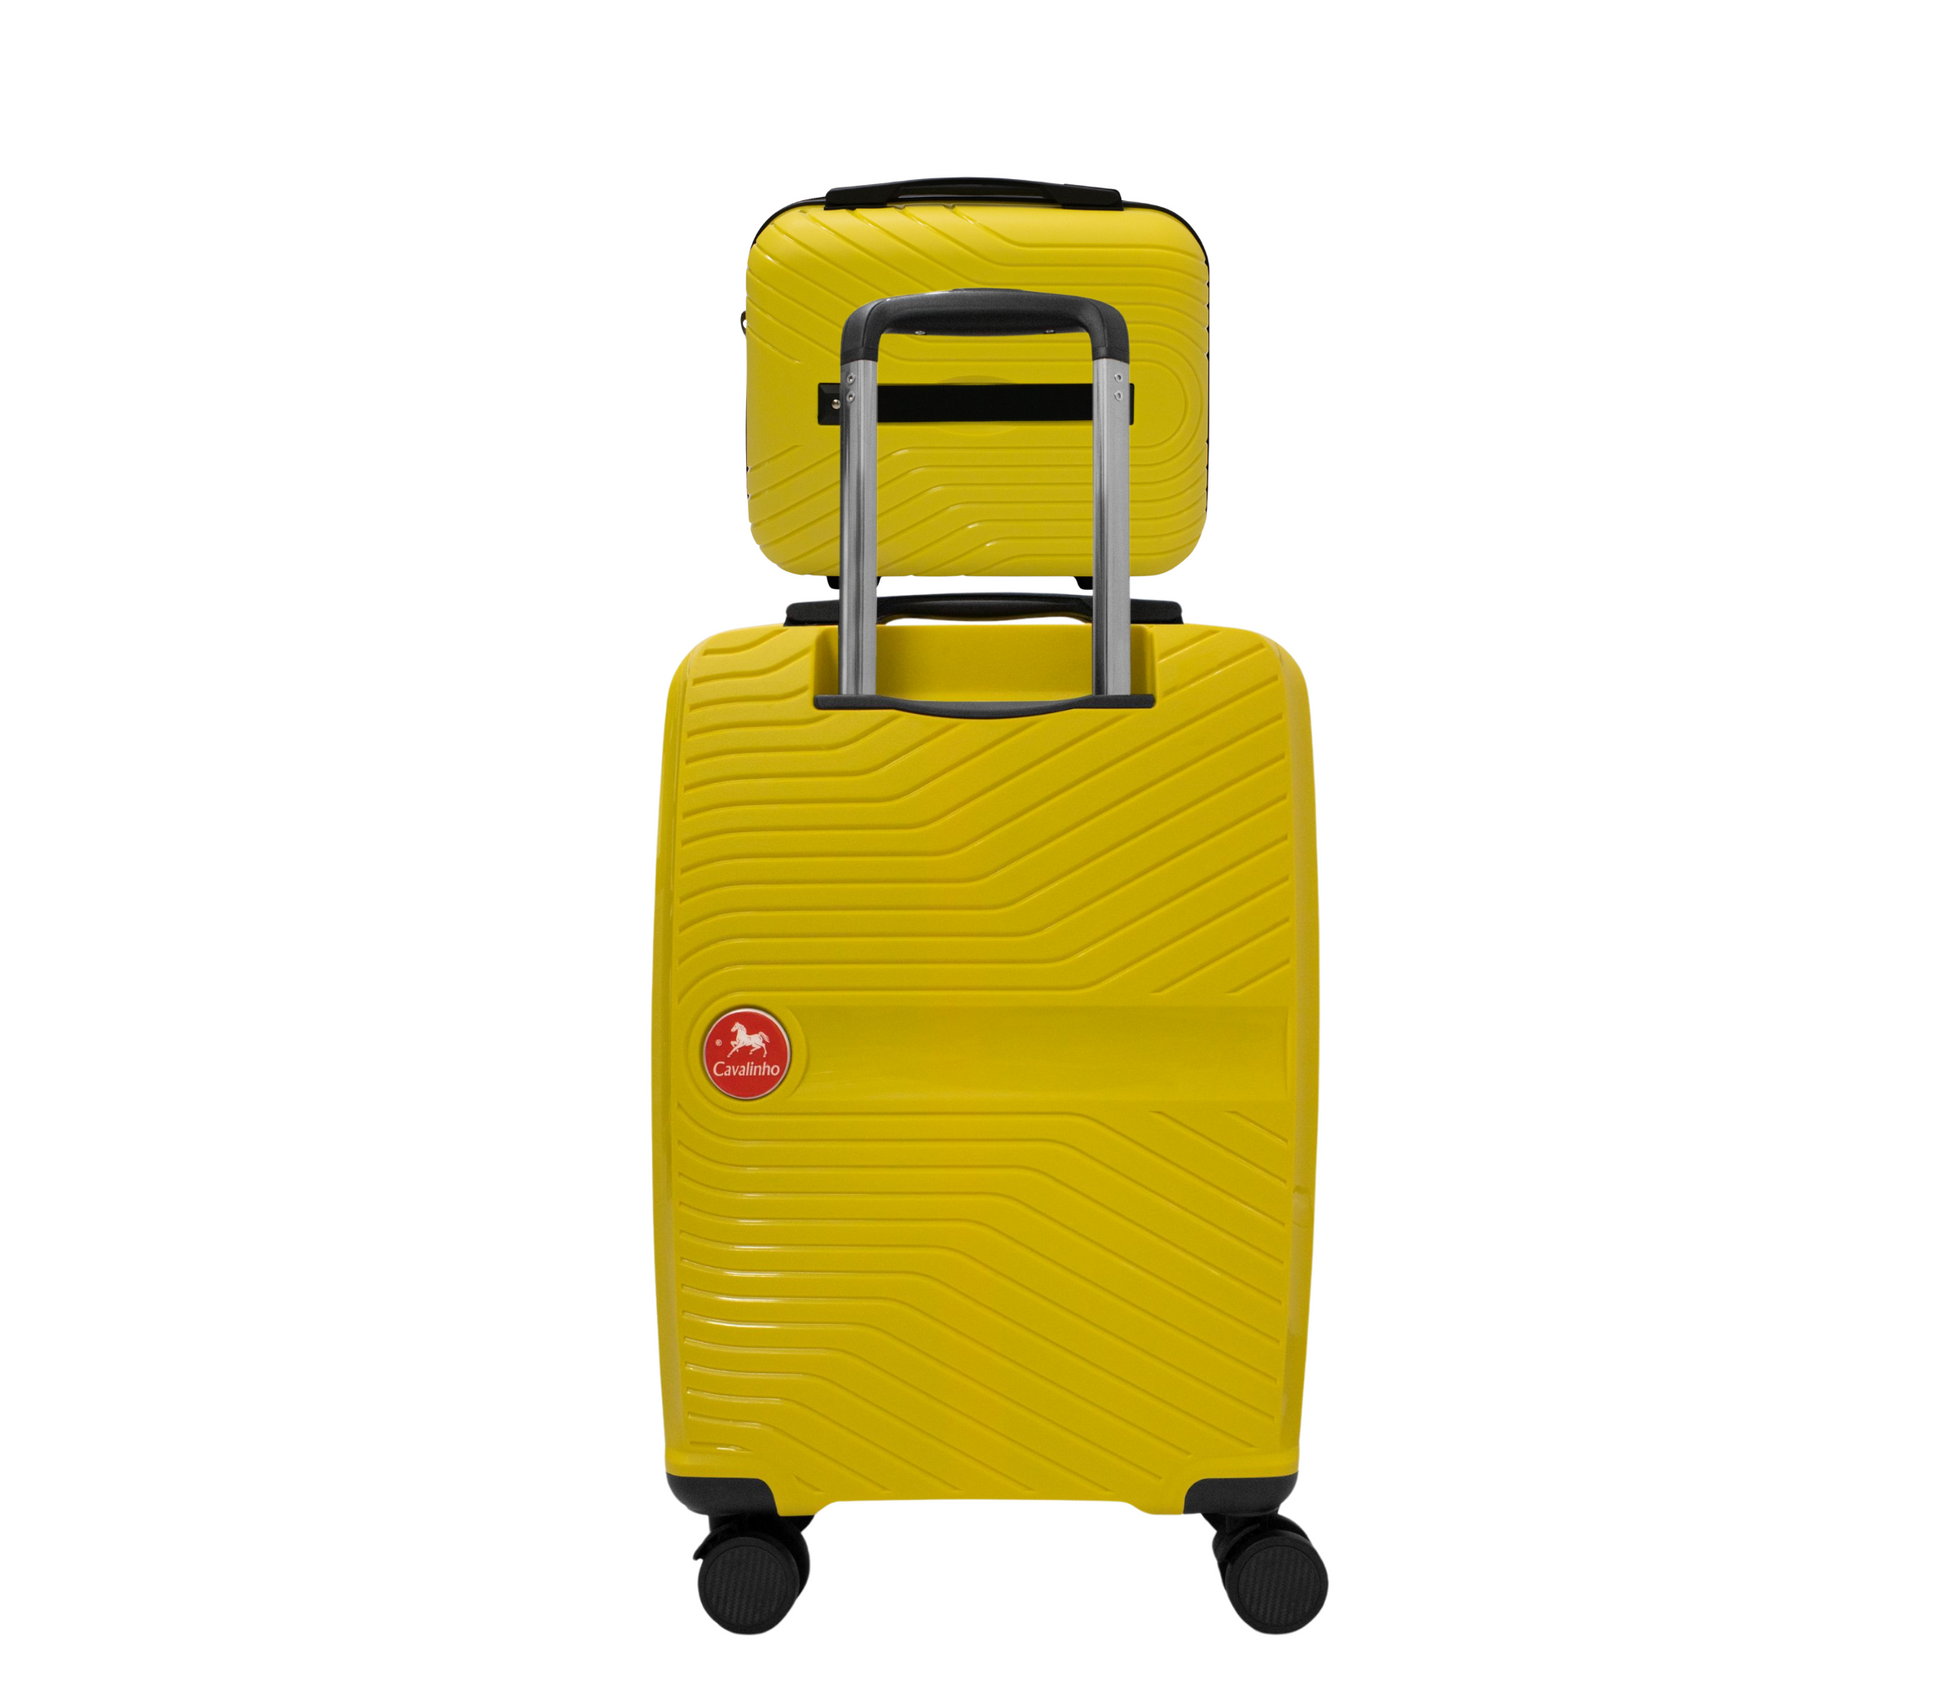 Cavalinho Colorful 2 Piece Luggage Set (15" & 19") - Yellow Yellow - 68020004.0808.S1519._2